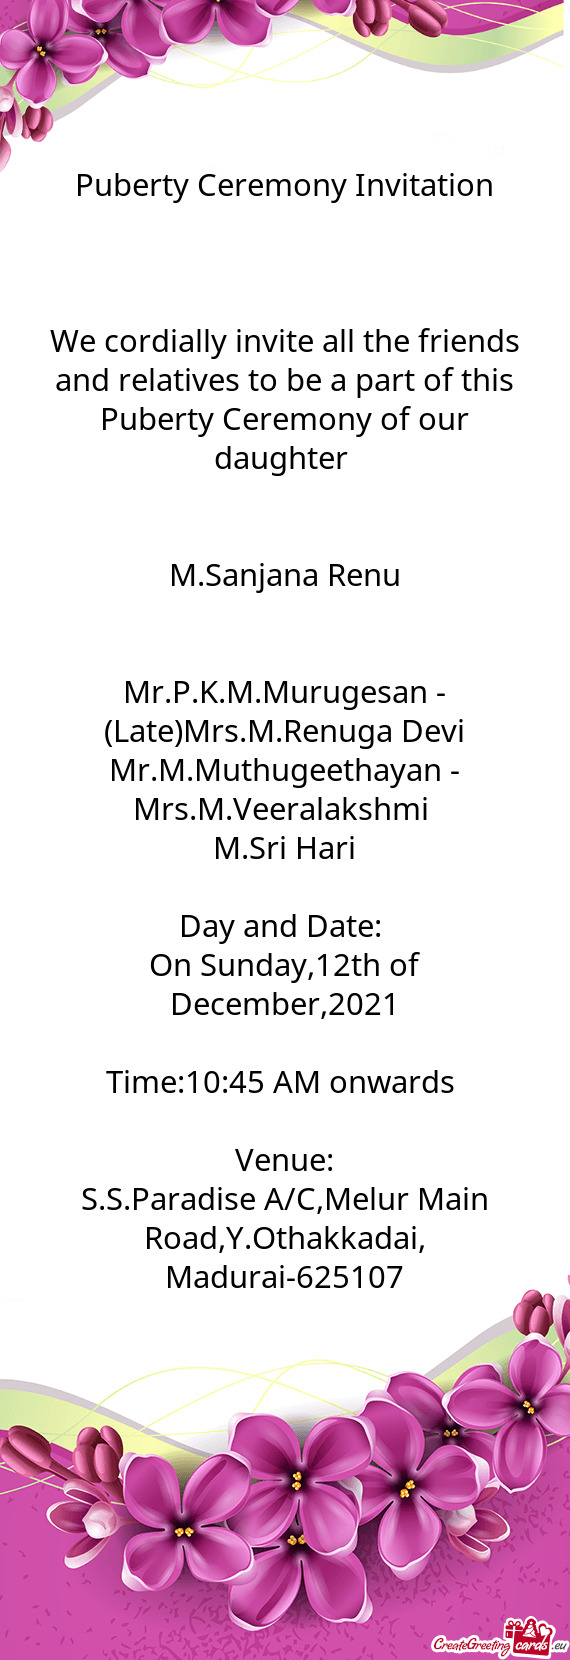 Mr.P.K.M.Murugesan - (Late)Mrs.M.Renuga Devi